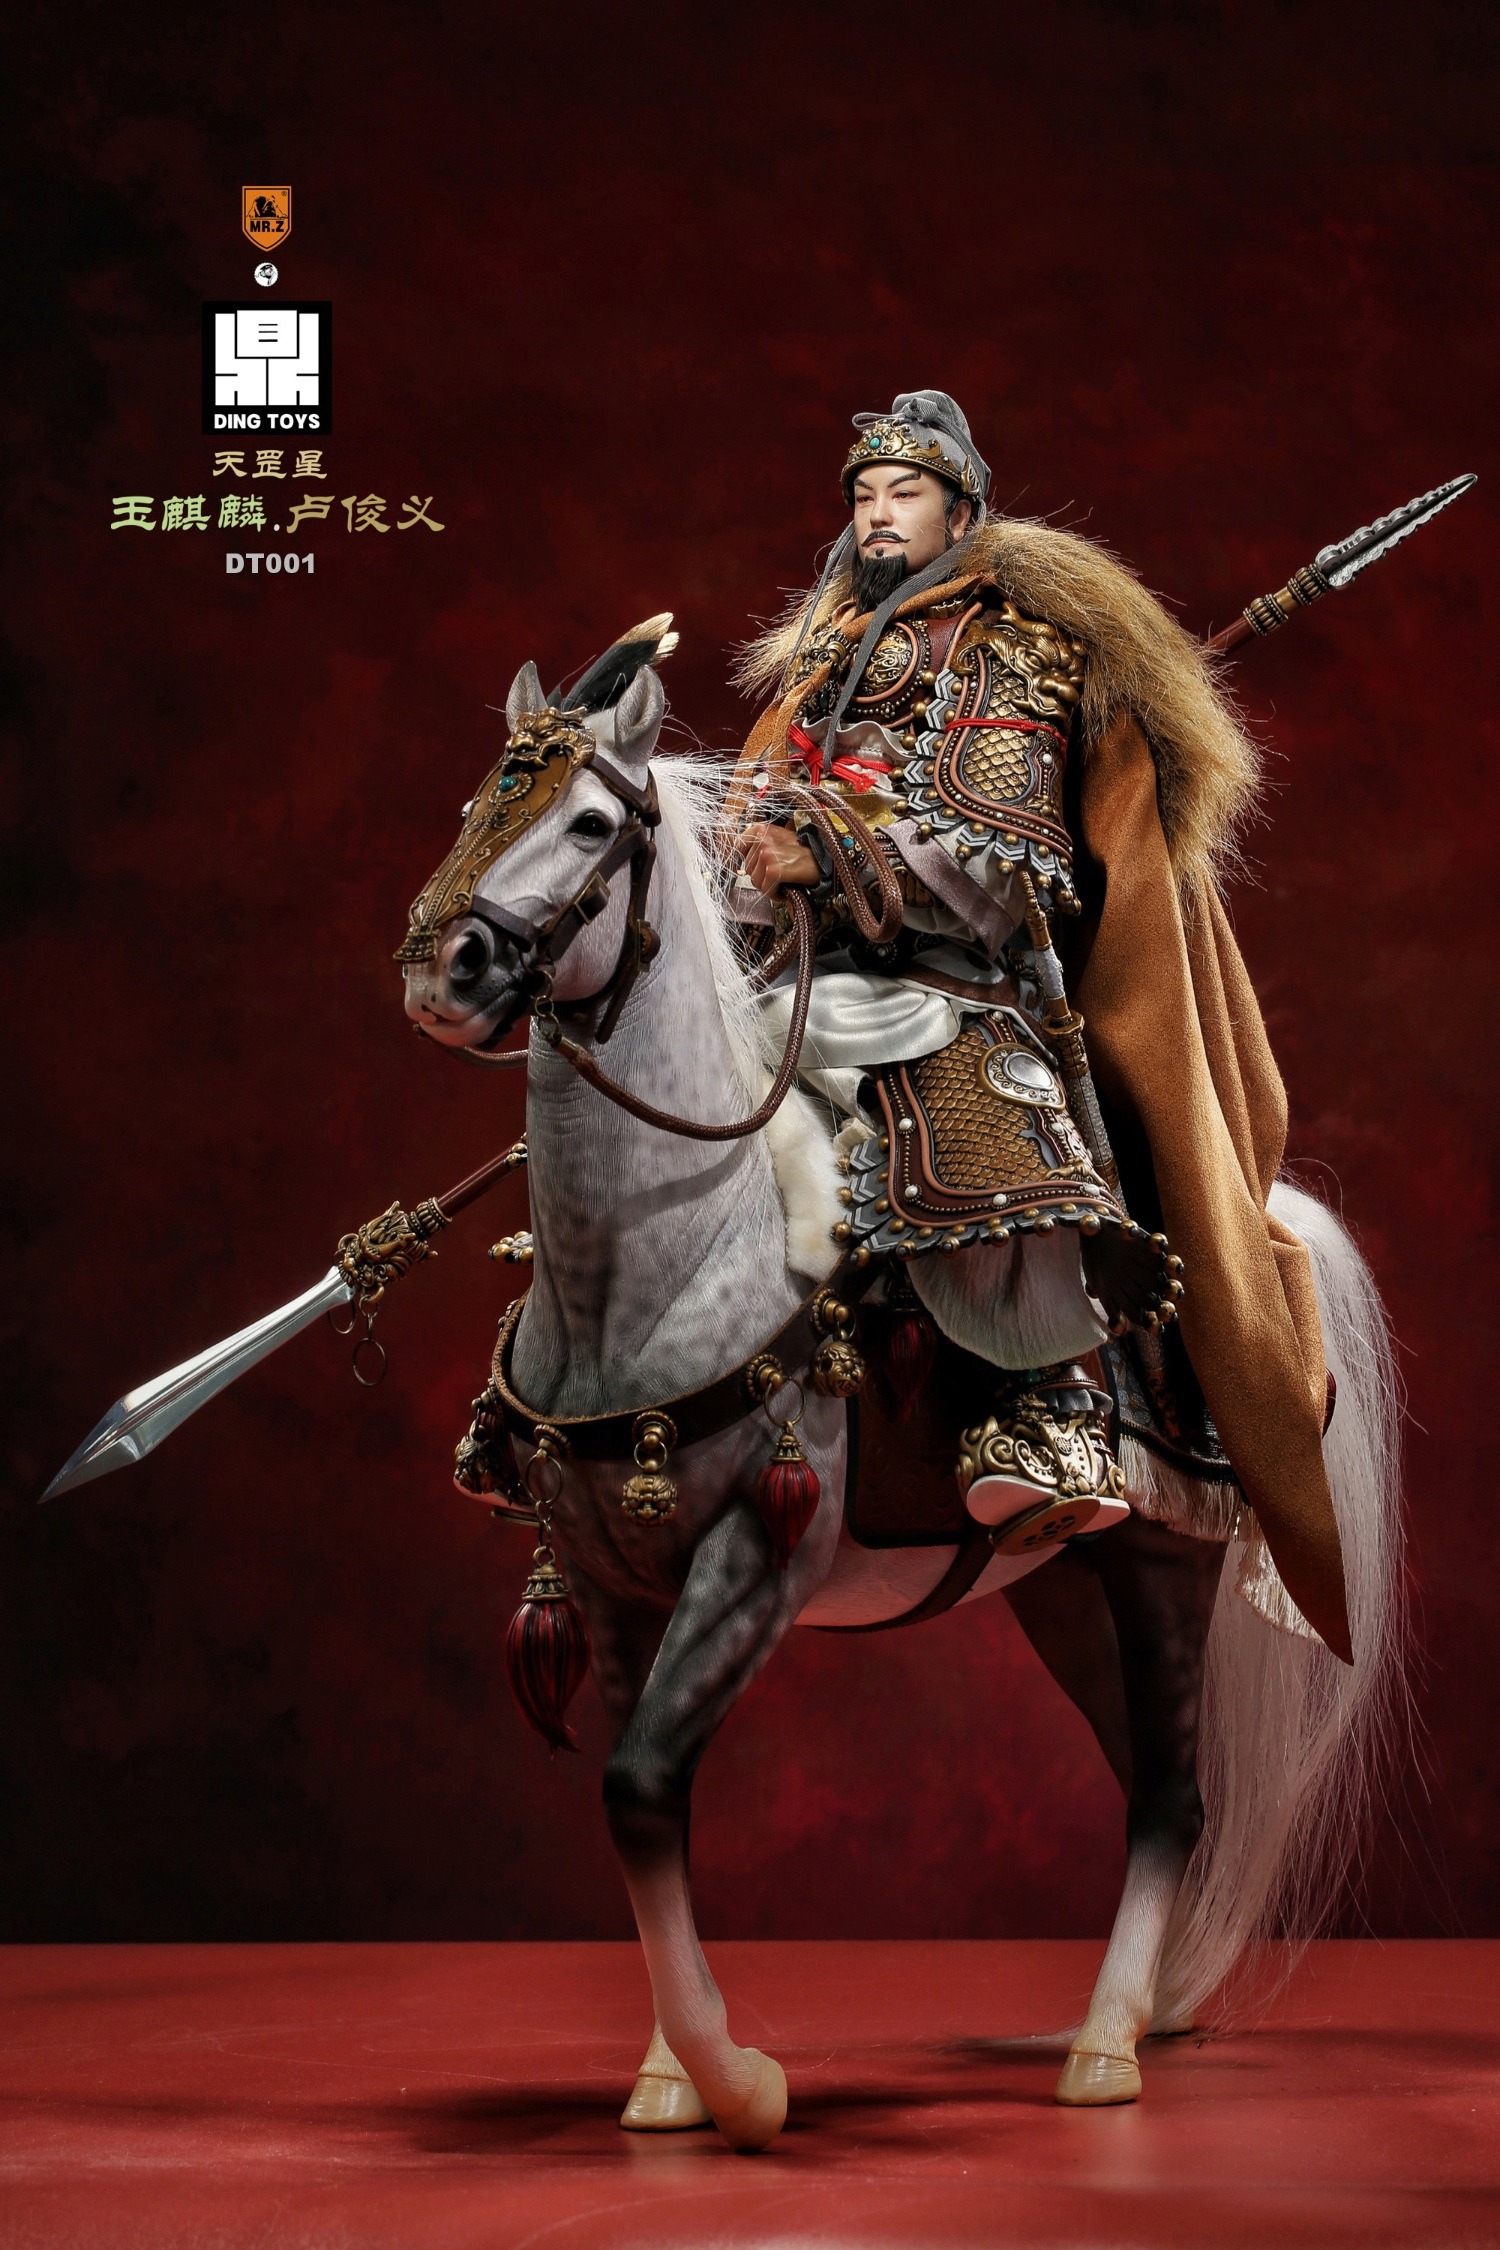 NEW PRODUCT: Mr.Z X DING TOYS - Tiangang Star Jade Qilin-Lu Junyi / war horse Qilin beast #DT001 0266